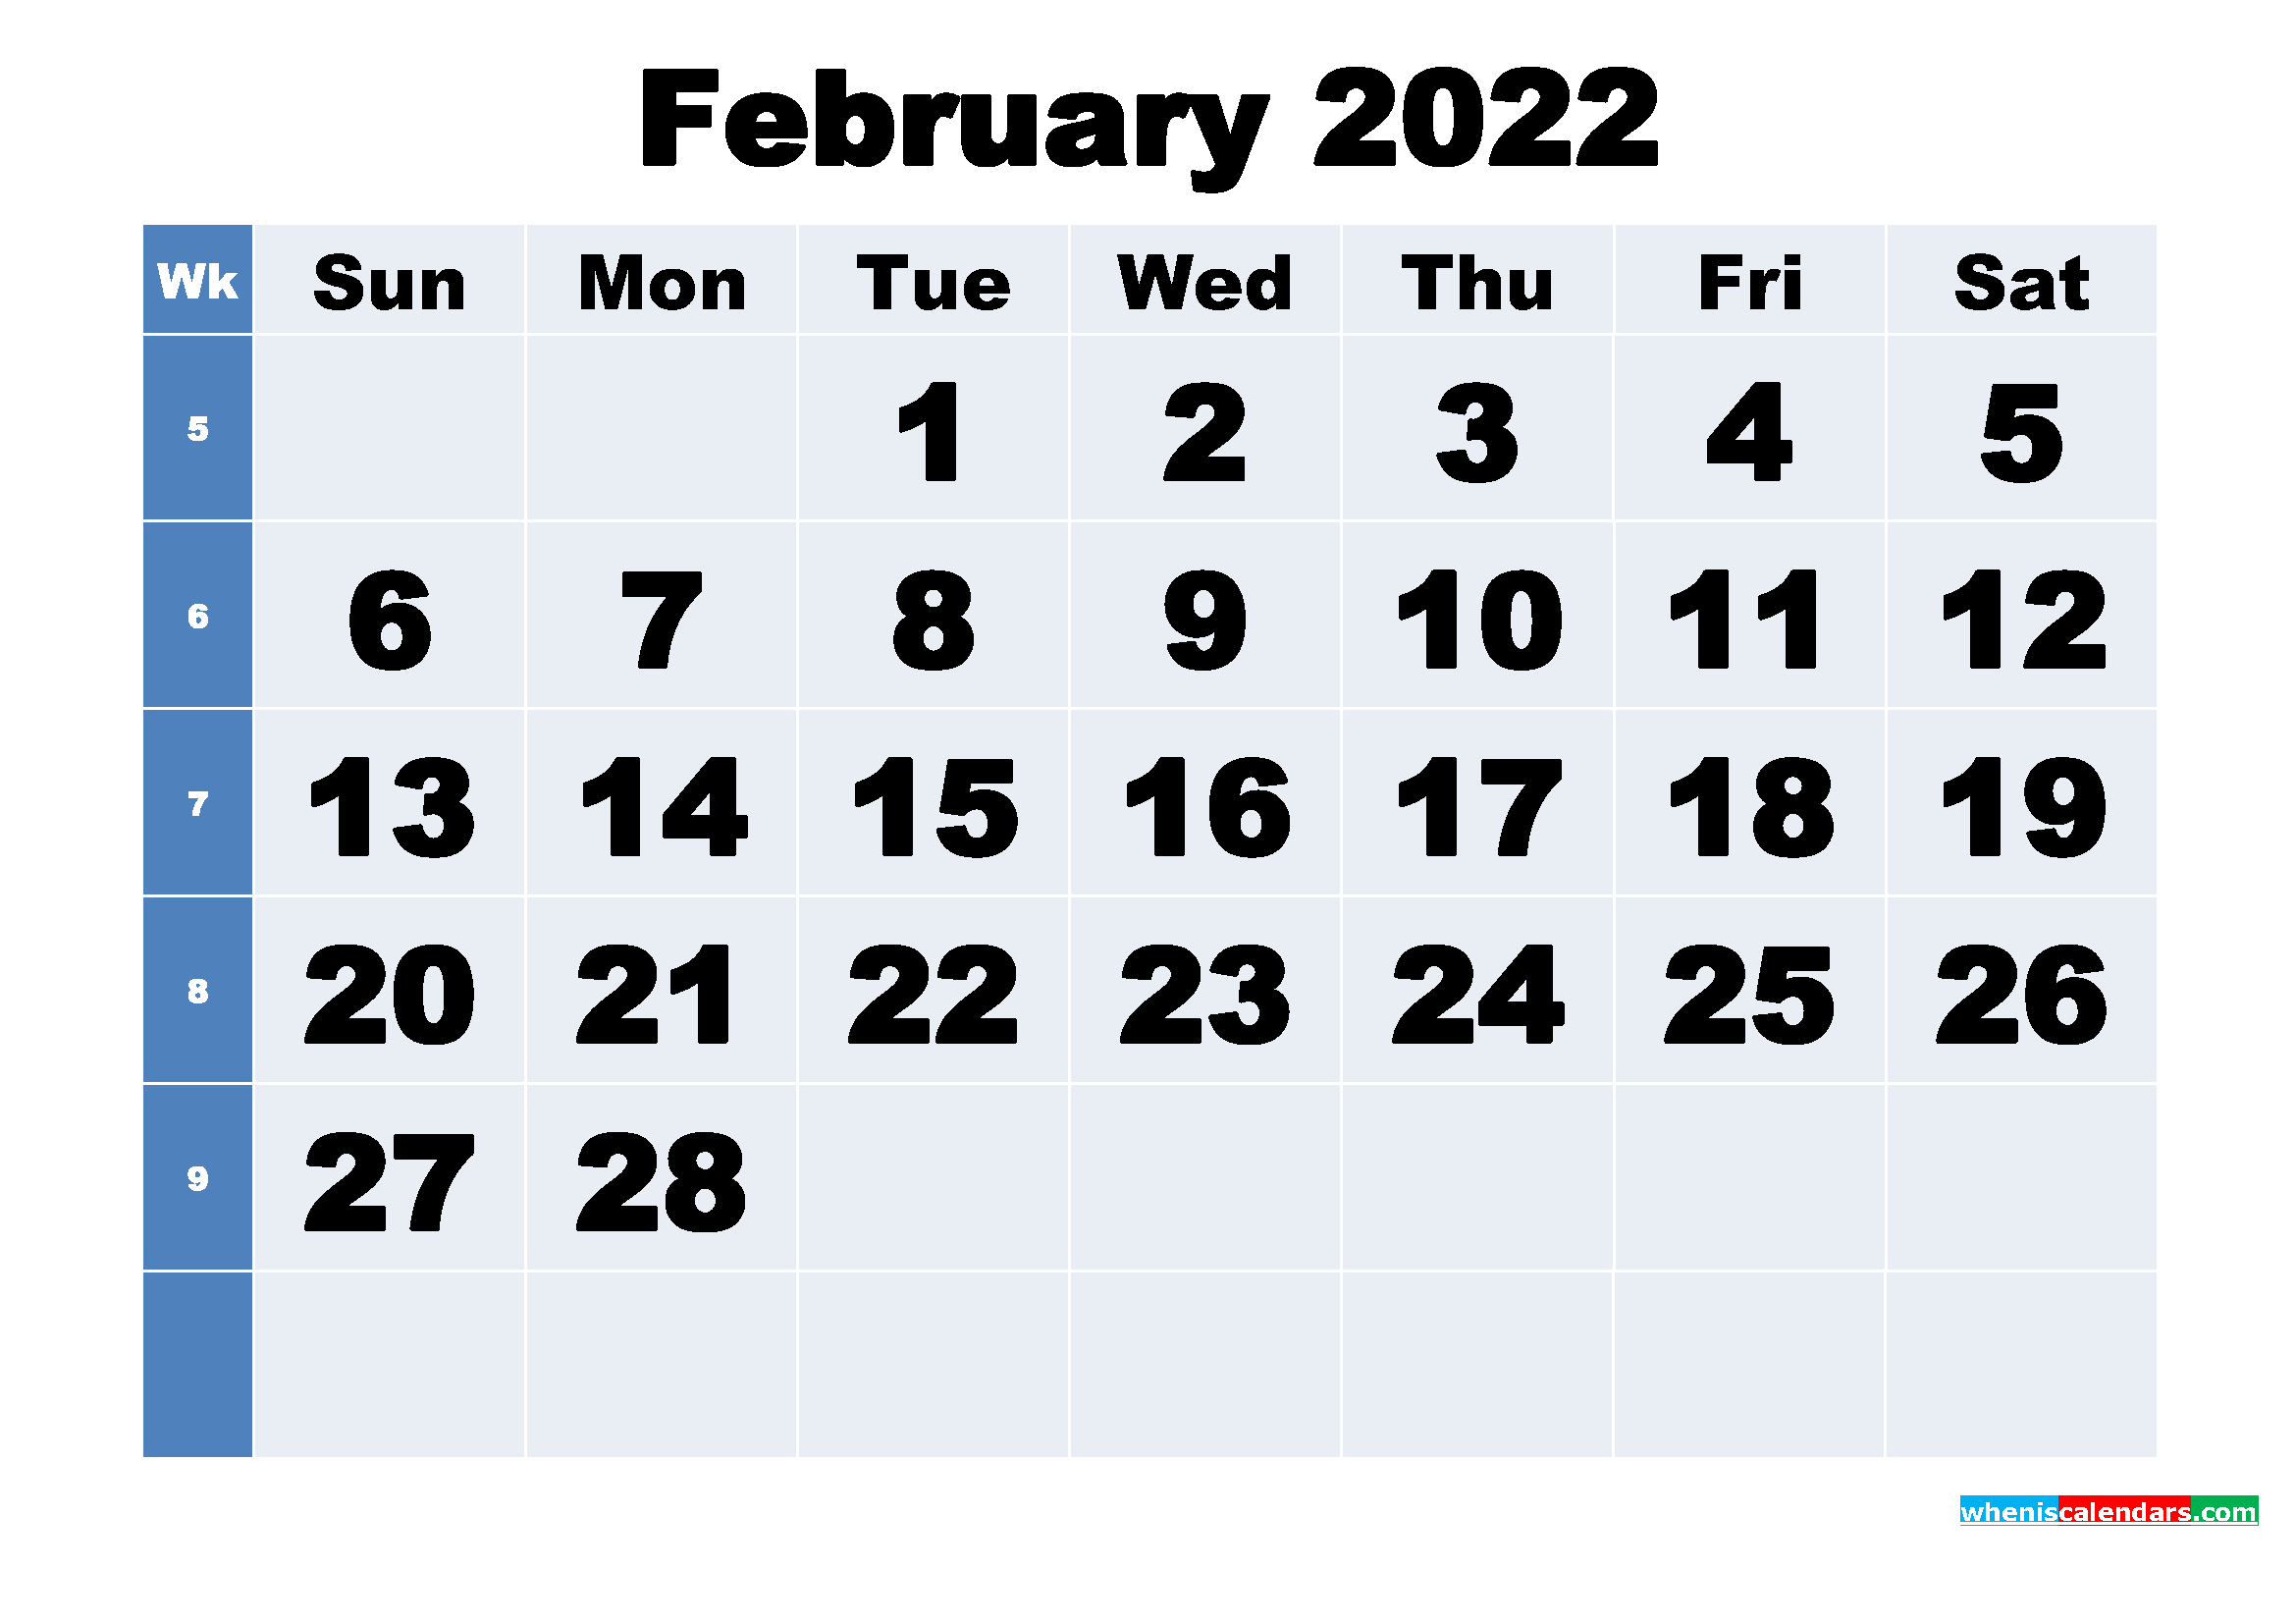 Free Printable February 2022 Calendar with Week Numbers